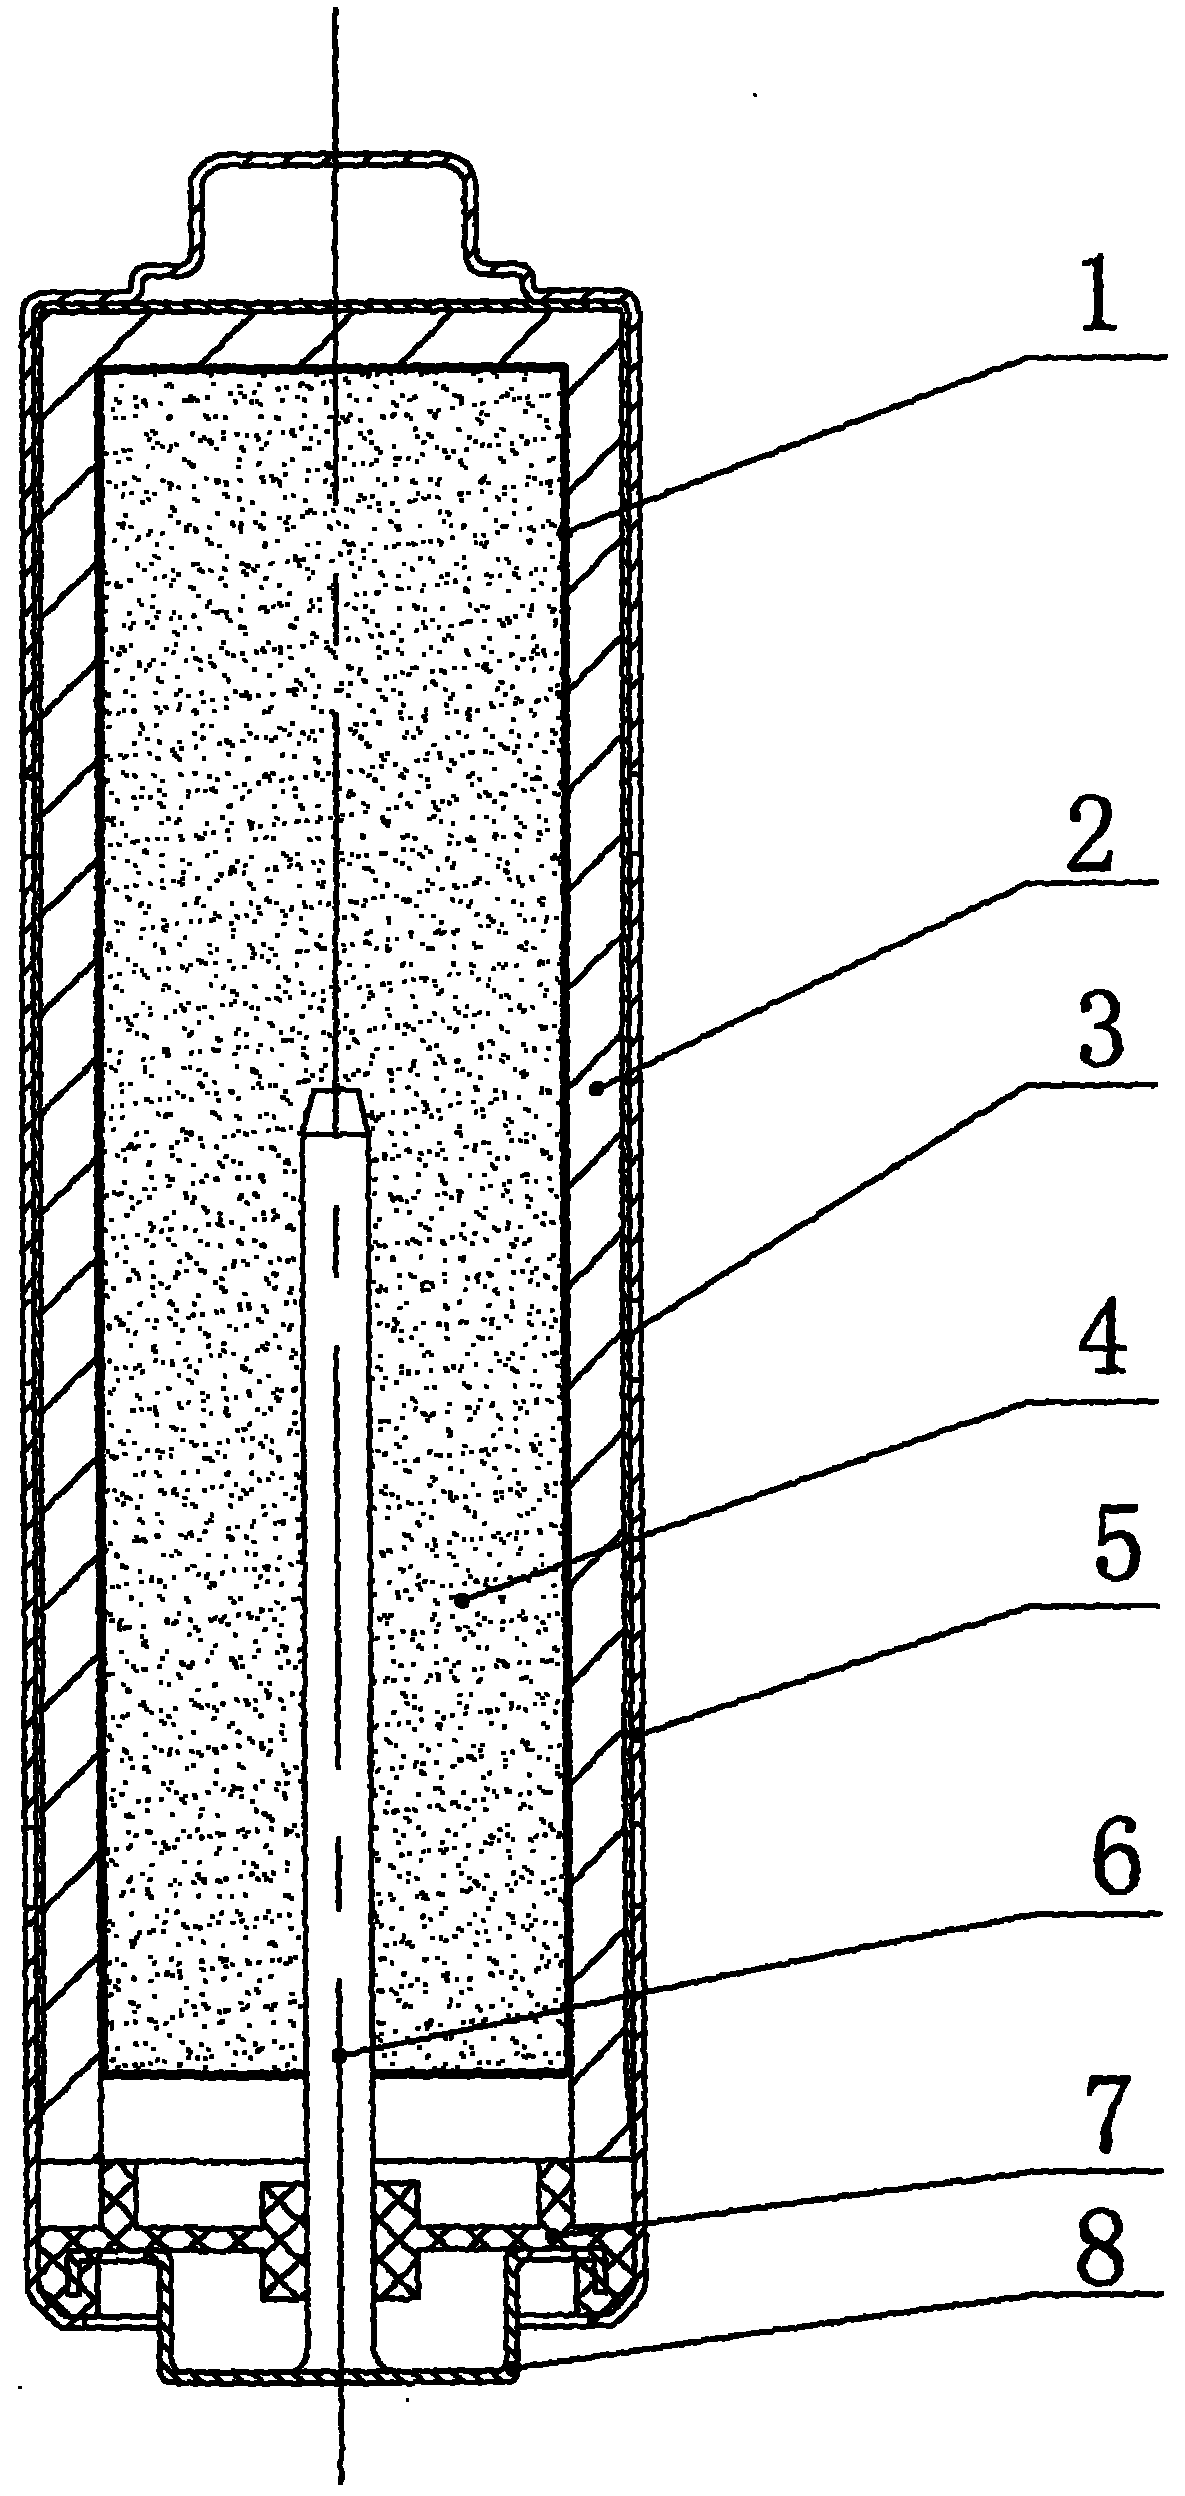 Novel method for sealing cylindrical zinc-air battery